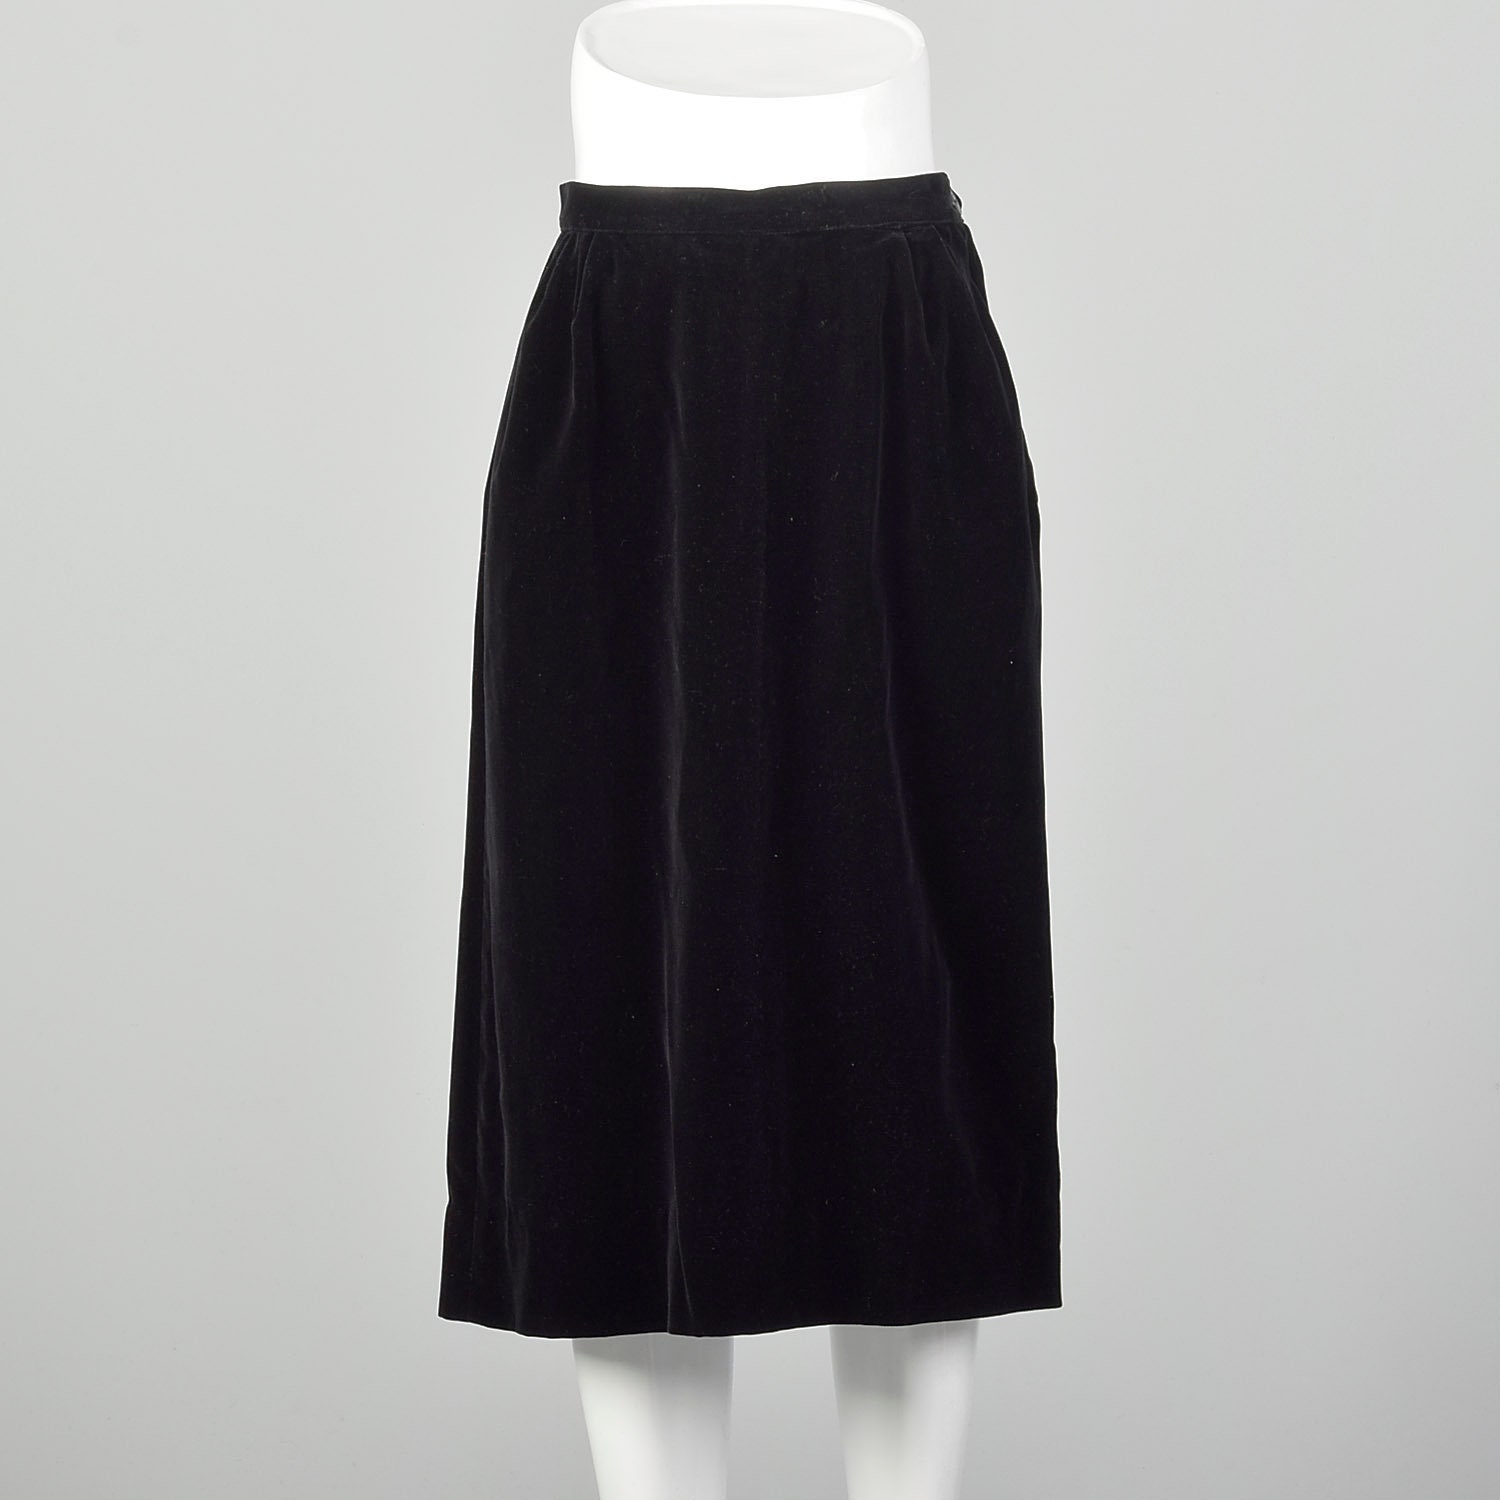 Small 1950s Skirt Black Velvet Rockabilly A-line Cotton | Etsy